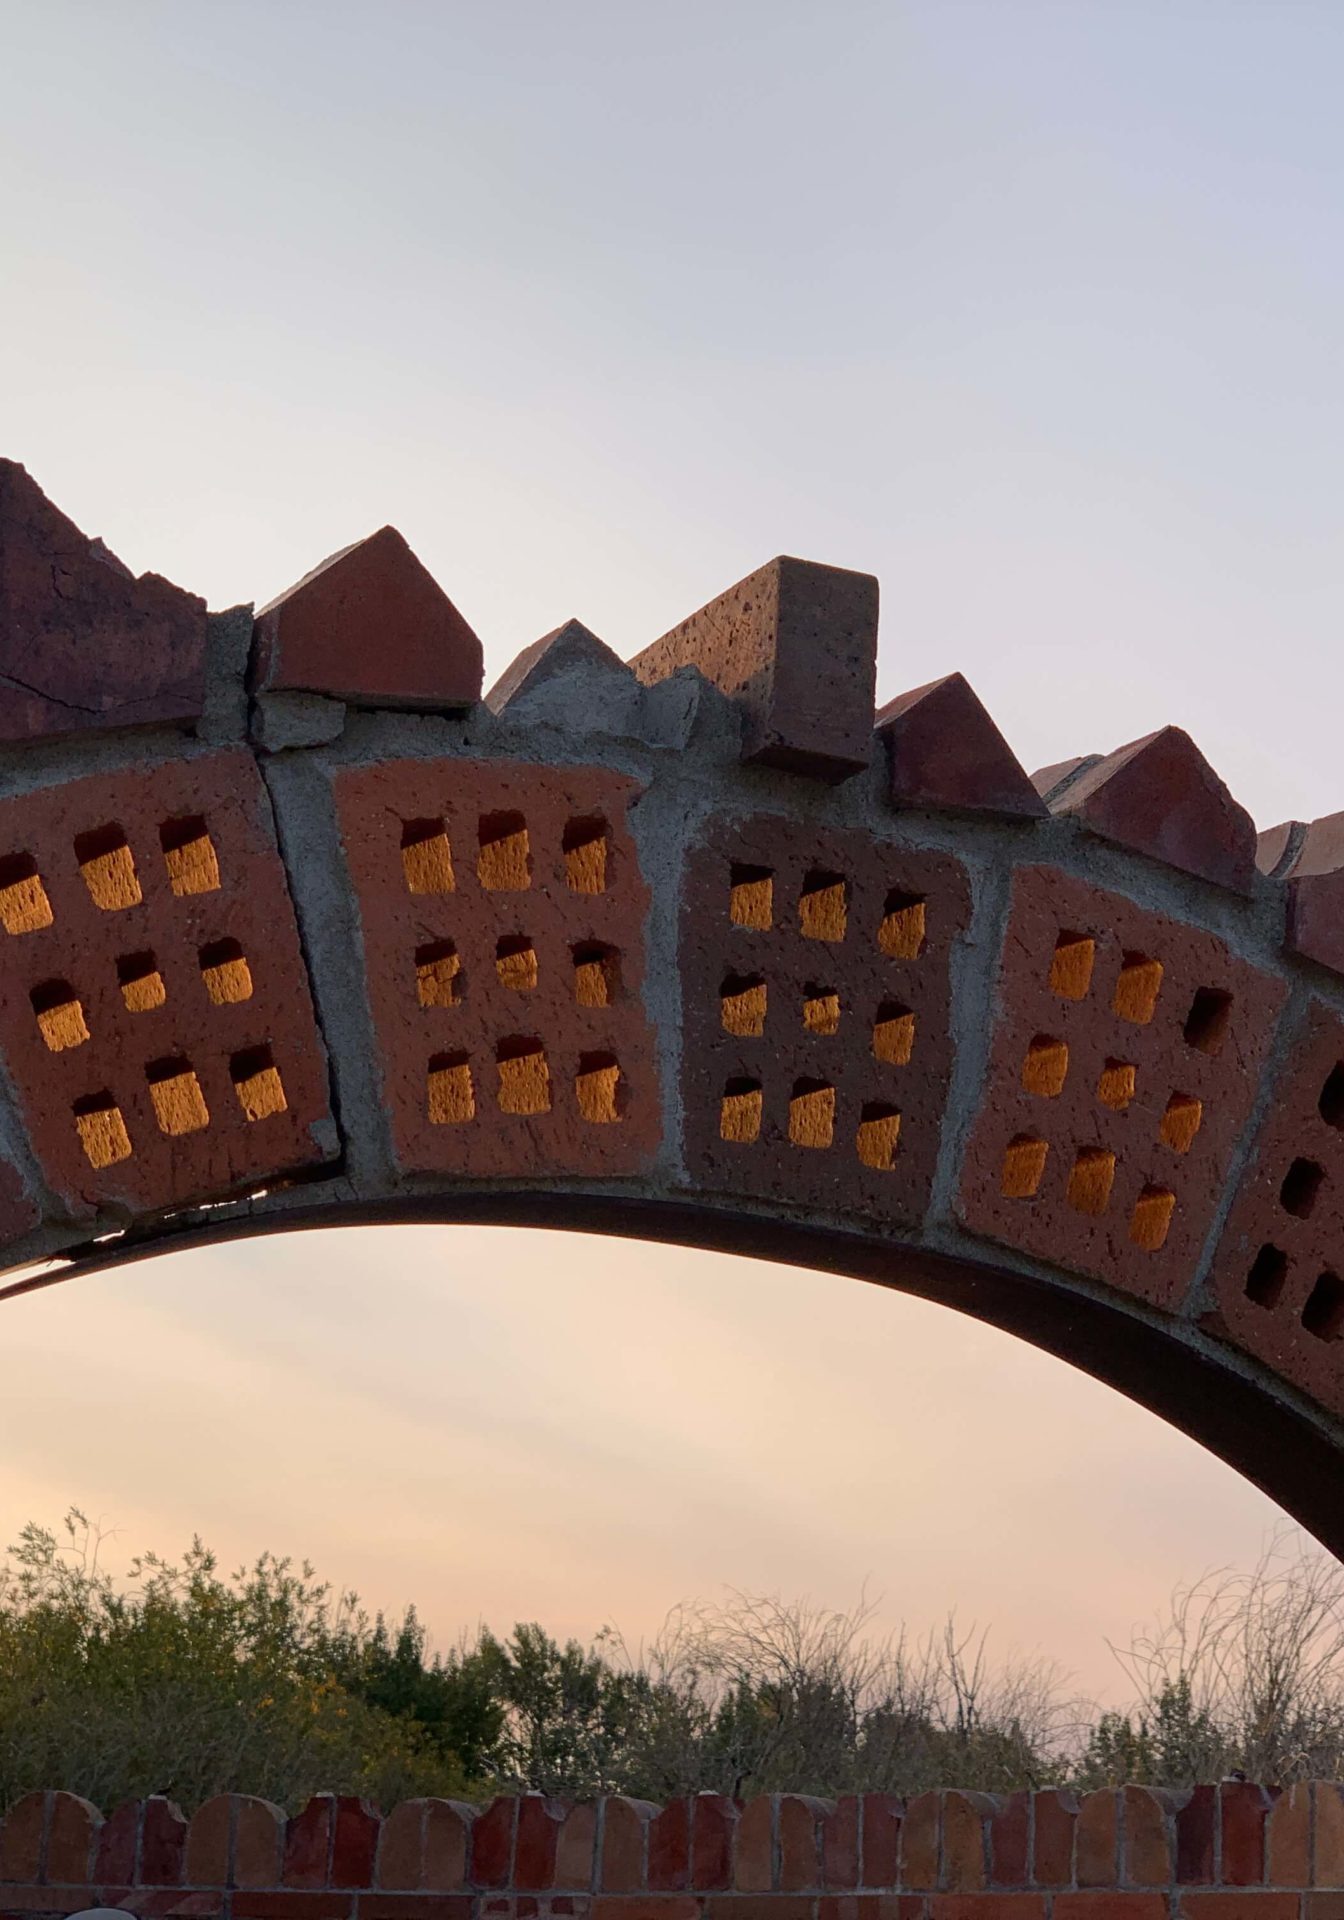 Brick Arch close up at sunset